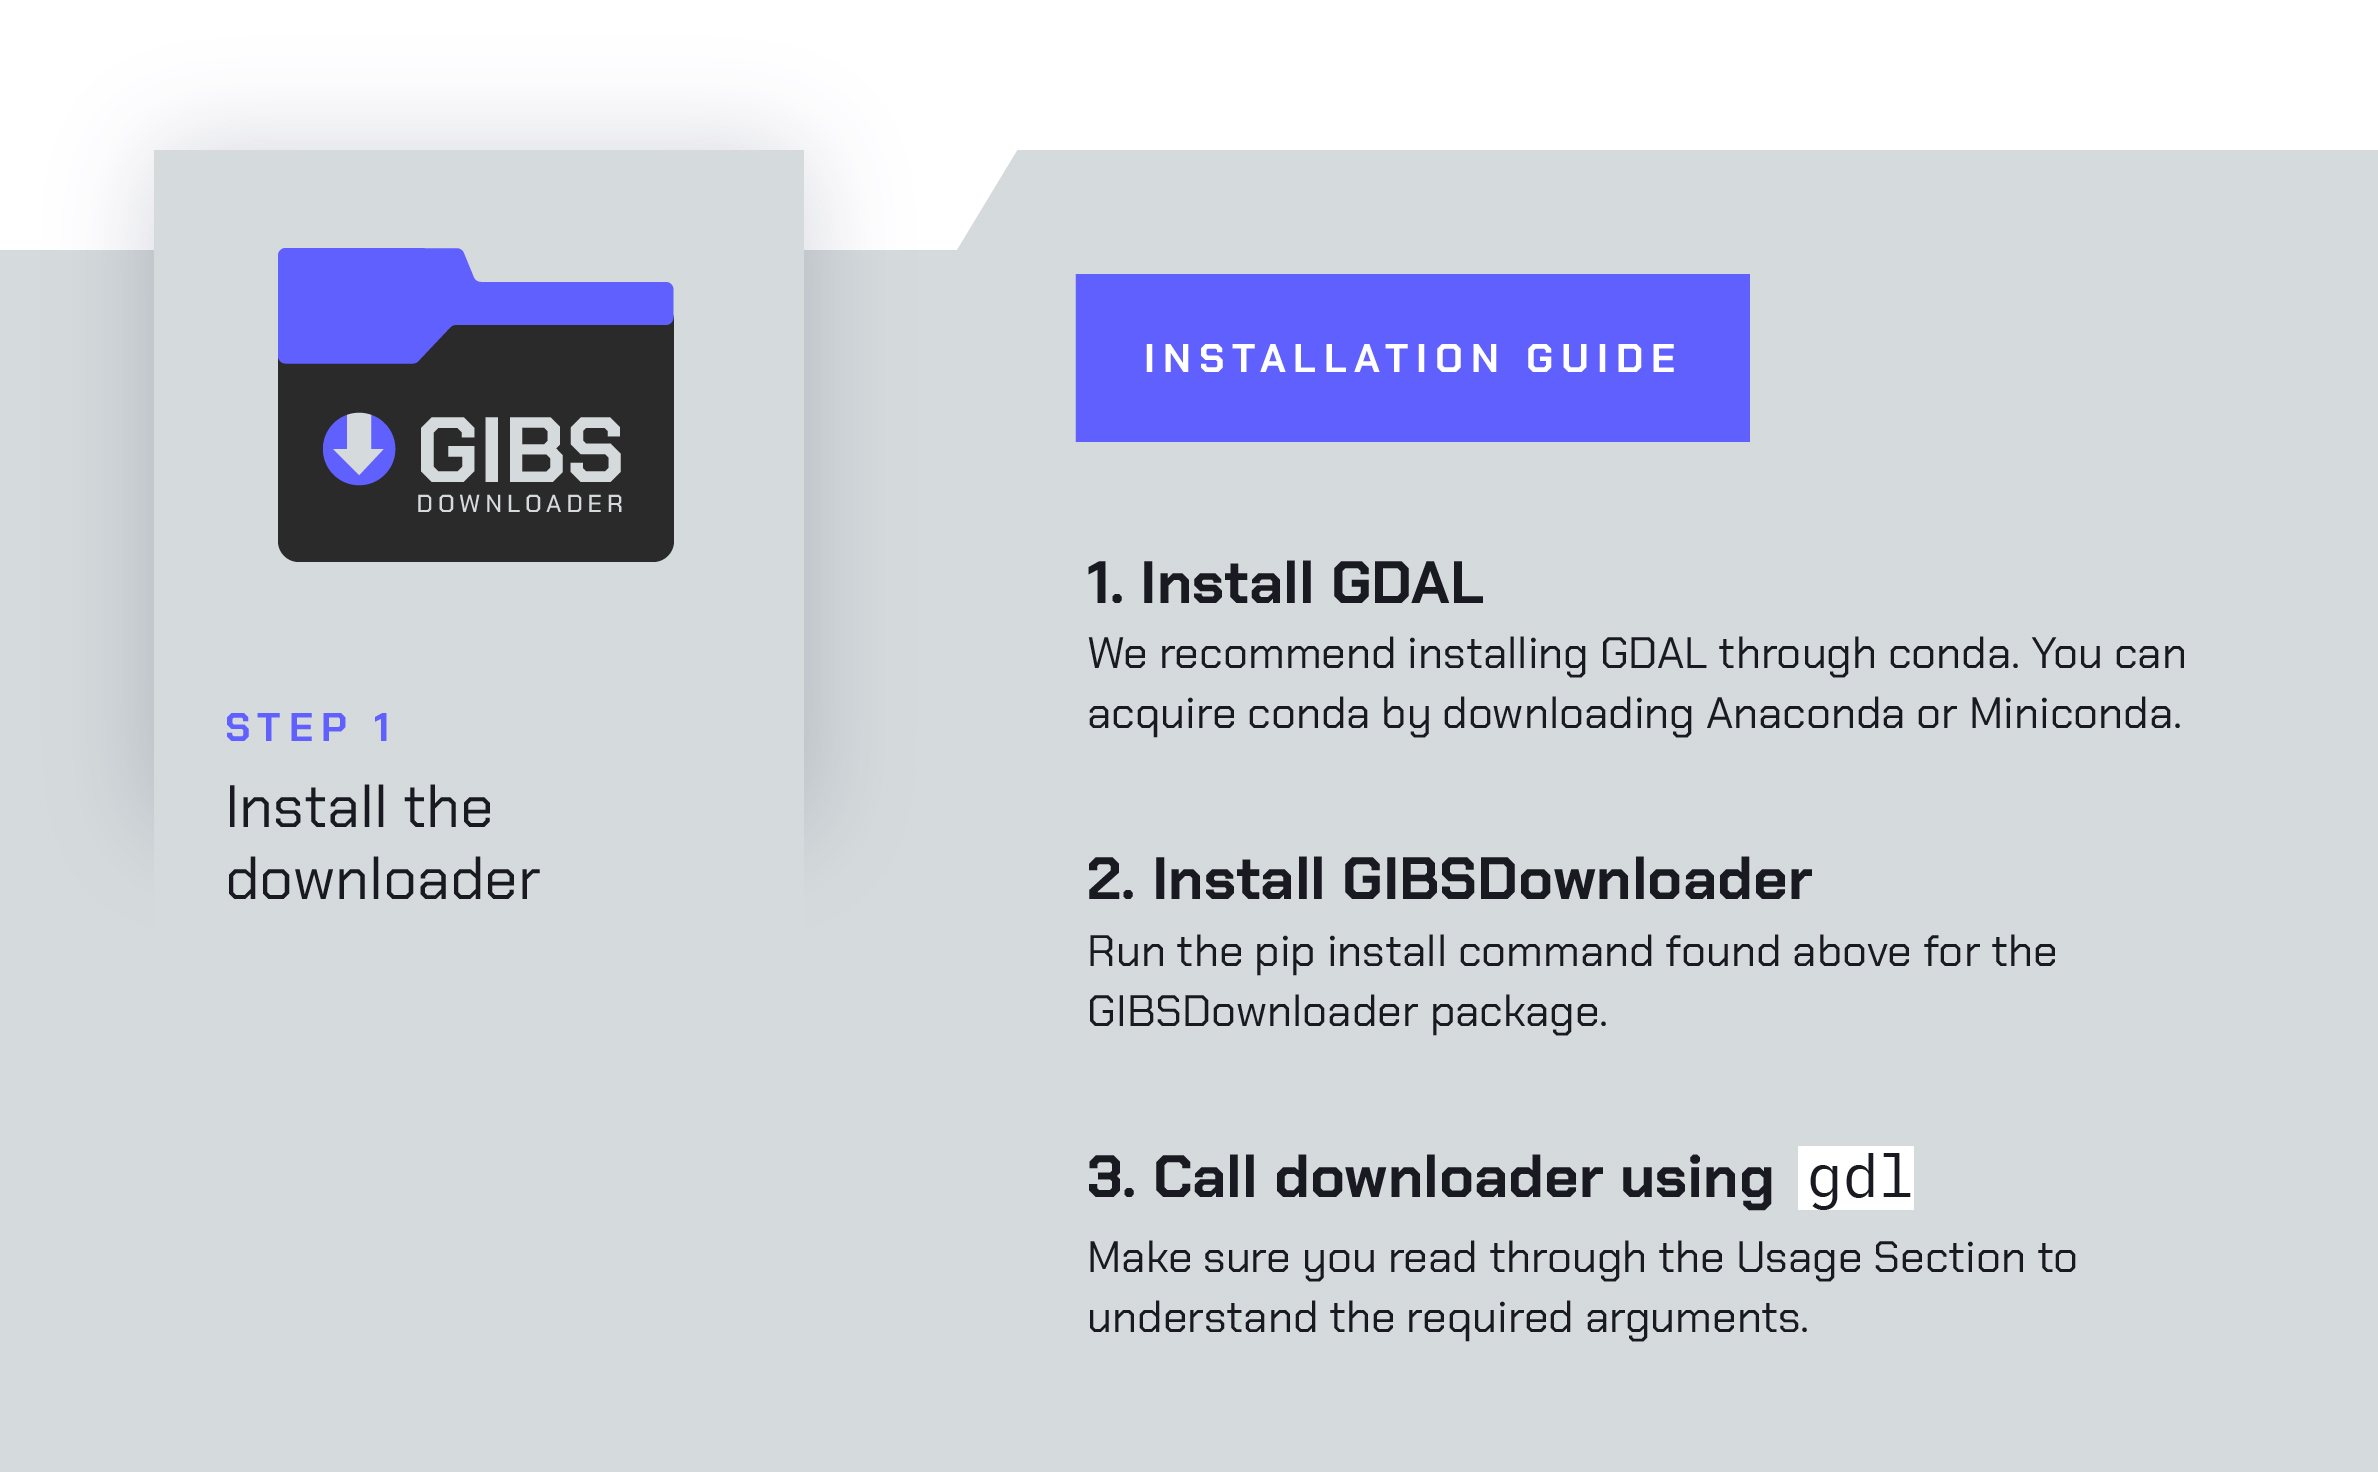 GIBS Downloader installation guide